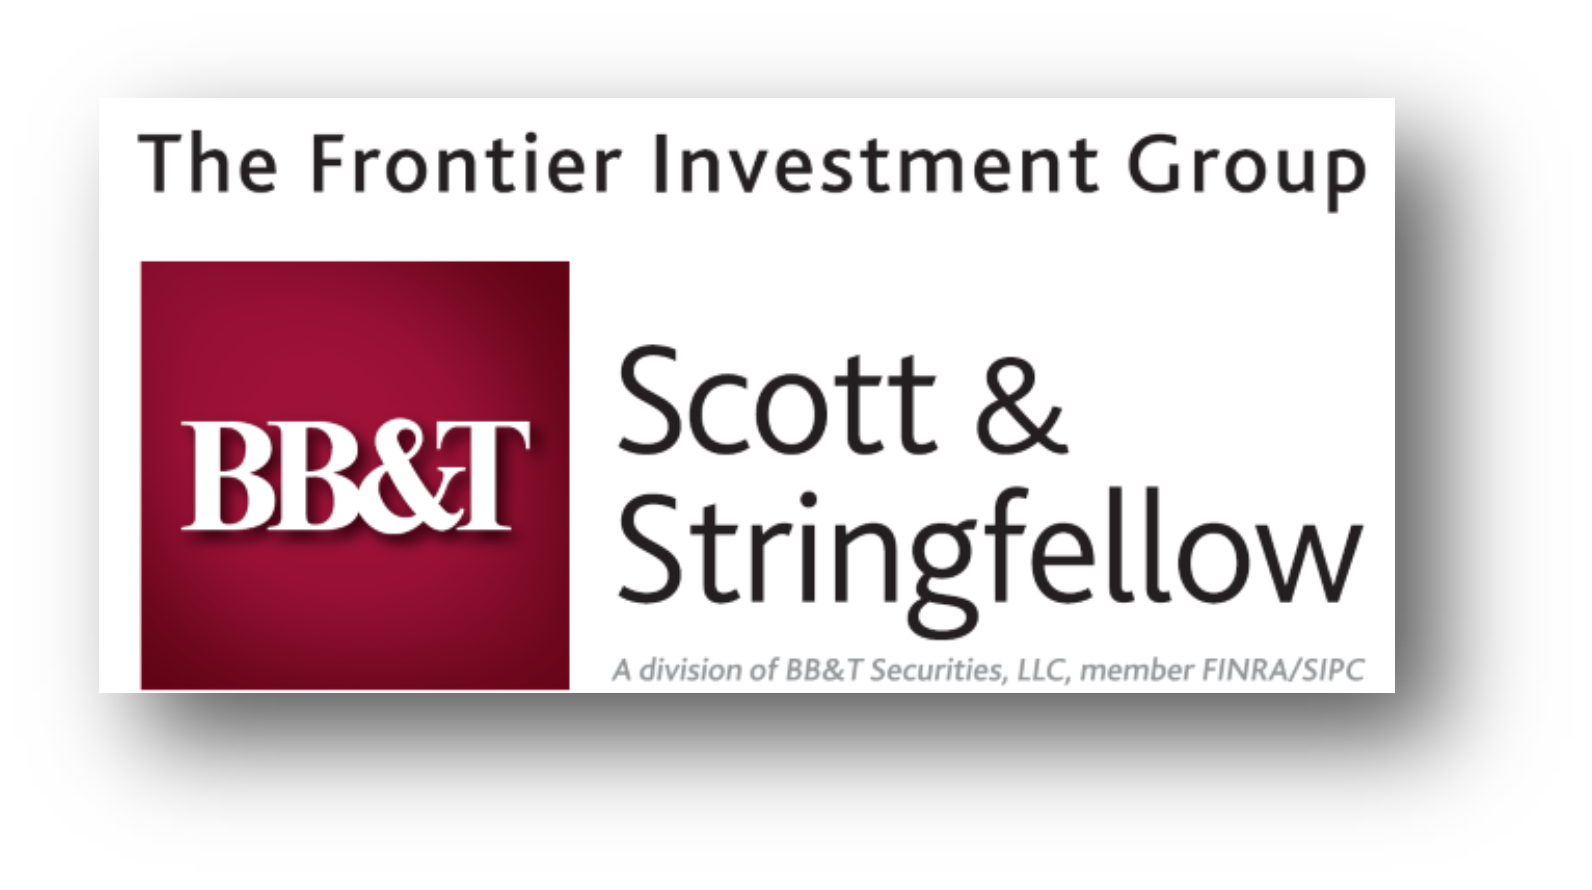 BB&T Scott & Strongfellow Frontier Investment Logo